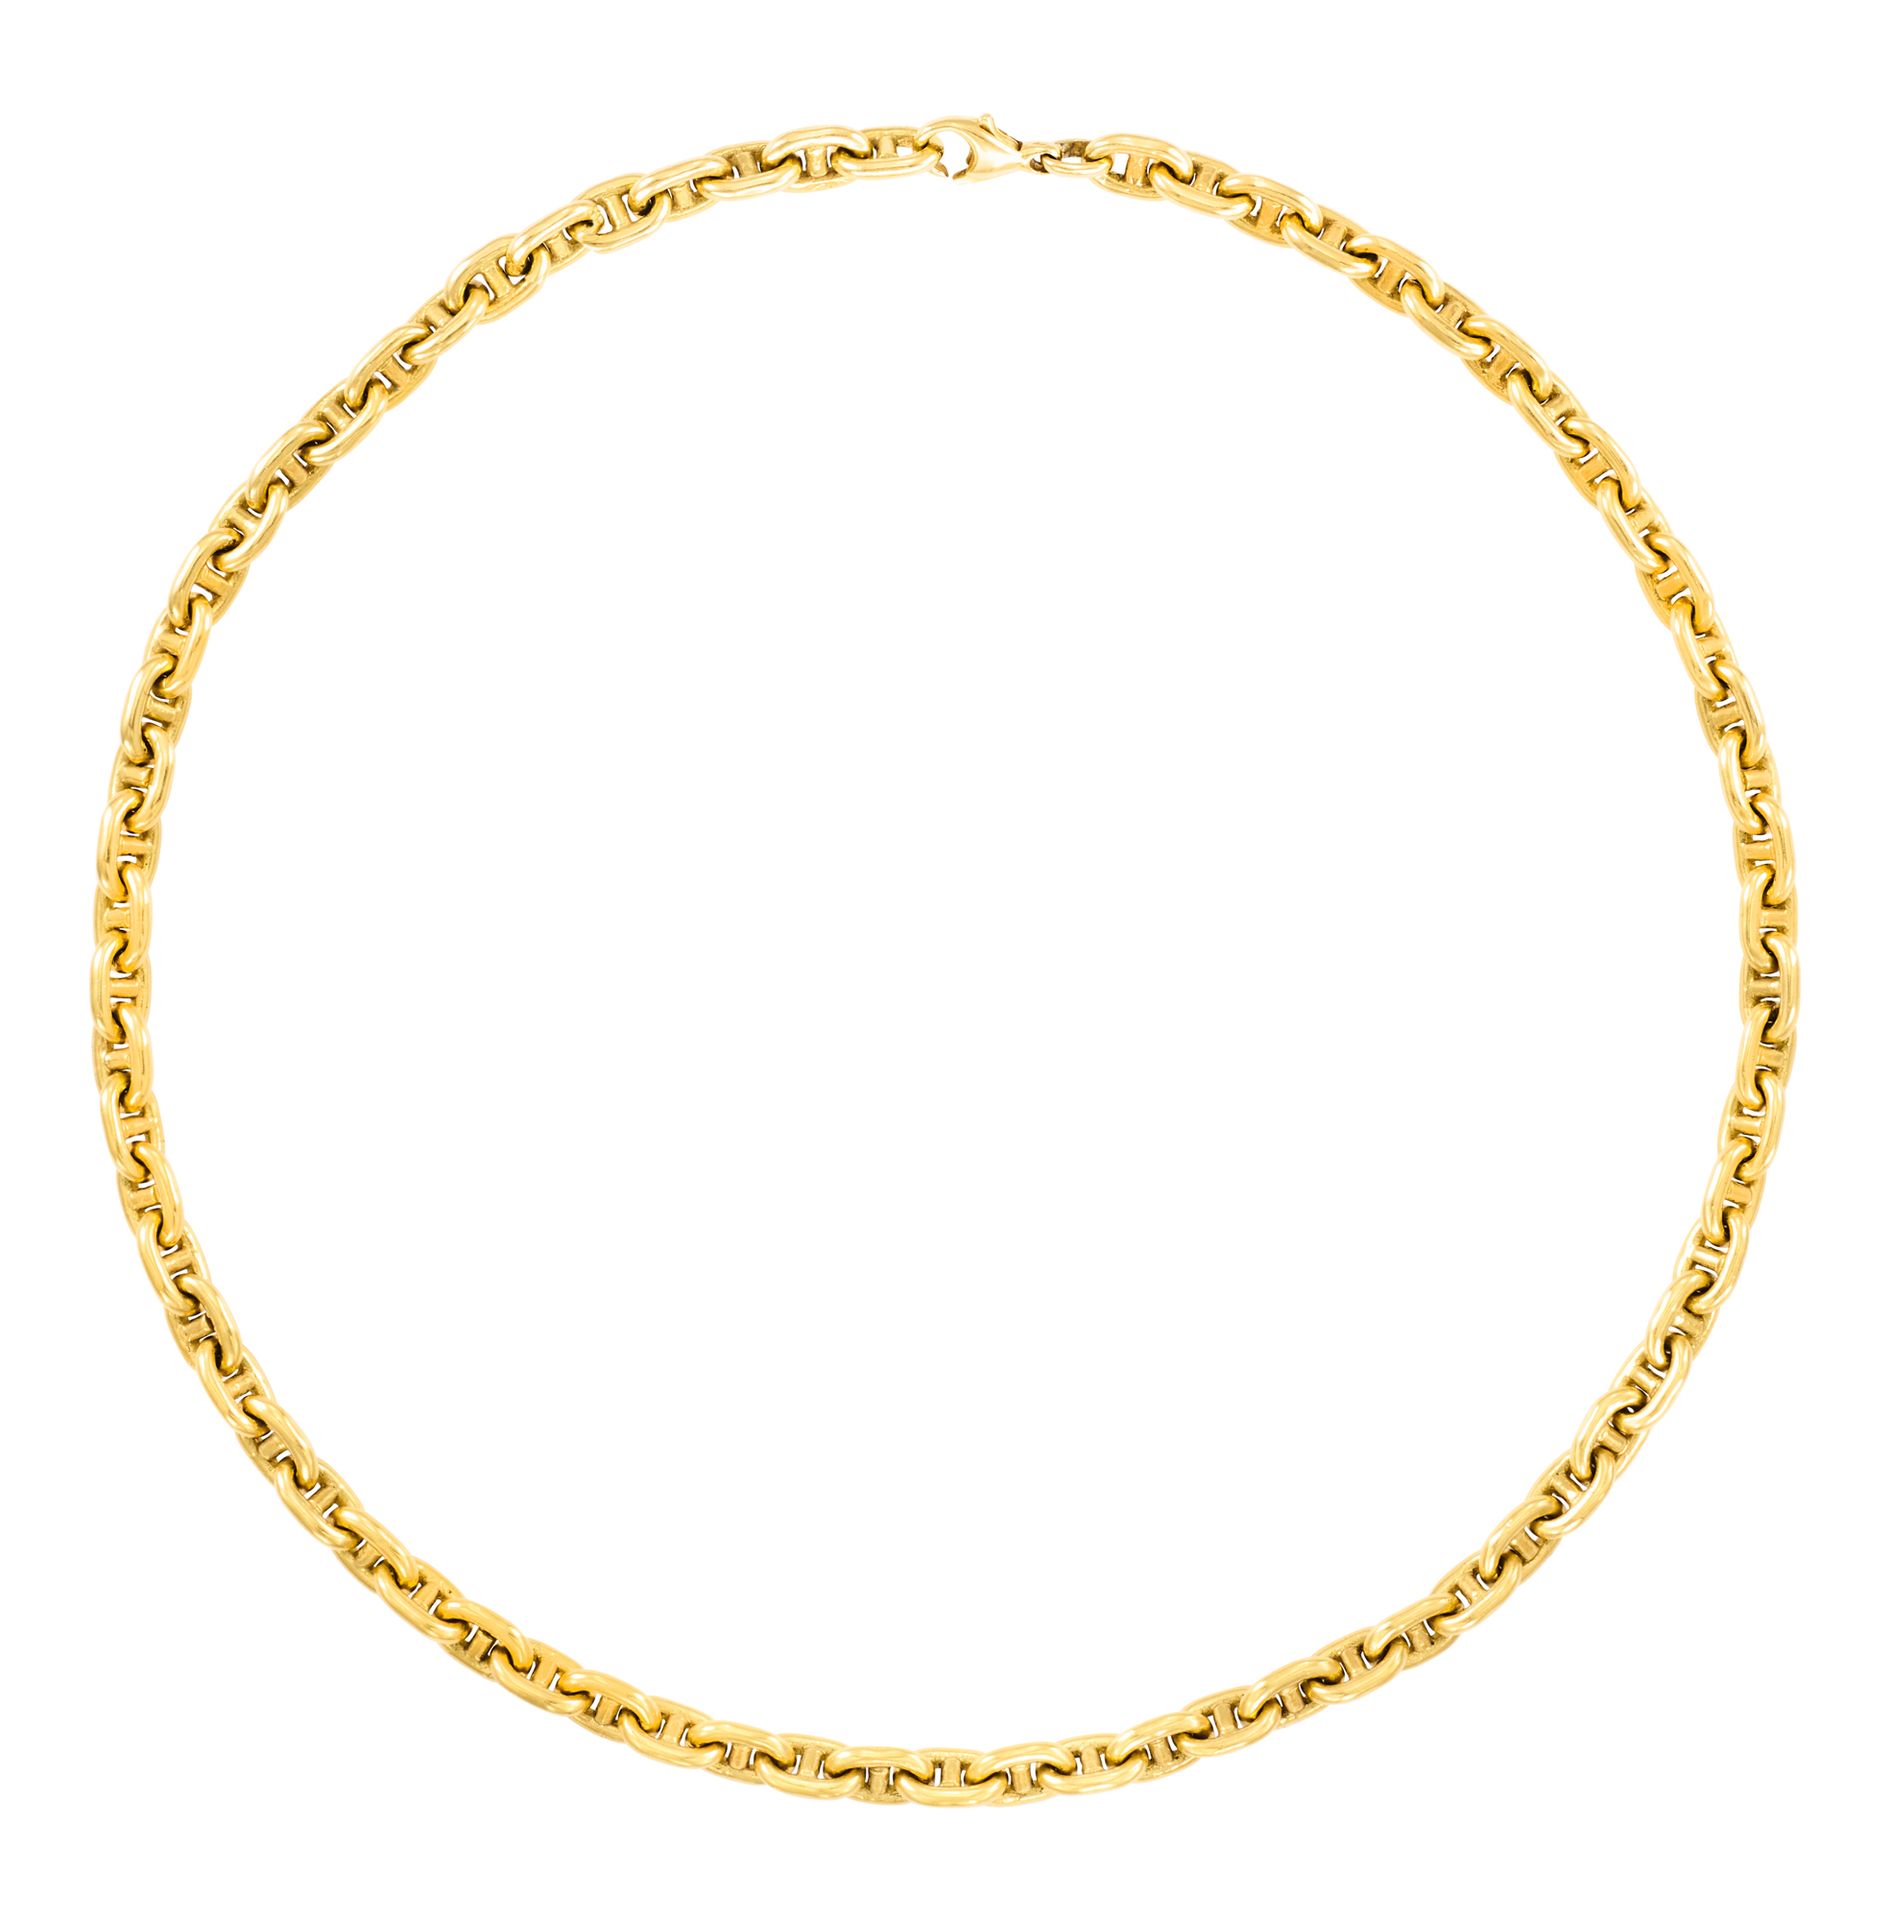 Collier eslabón marino de oro macizo
L: 40 cm - eslabón L: 0,8 cm - A: 0,5 cm 
P&hellip;